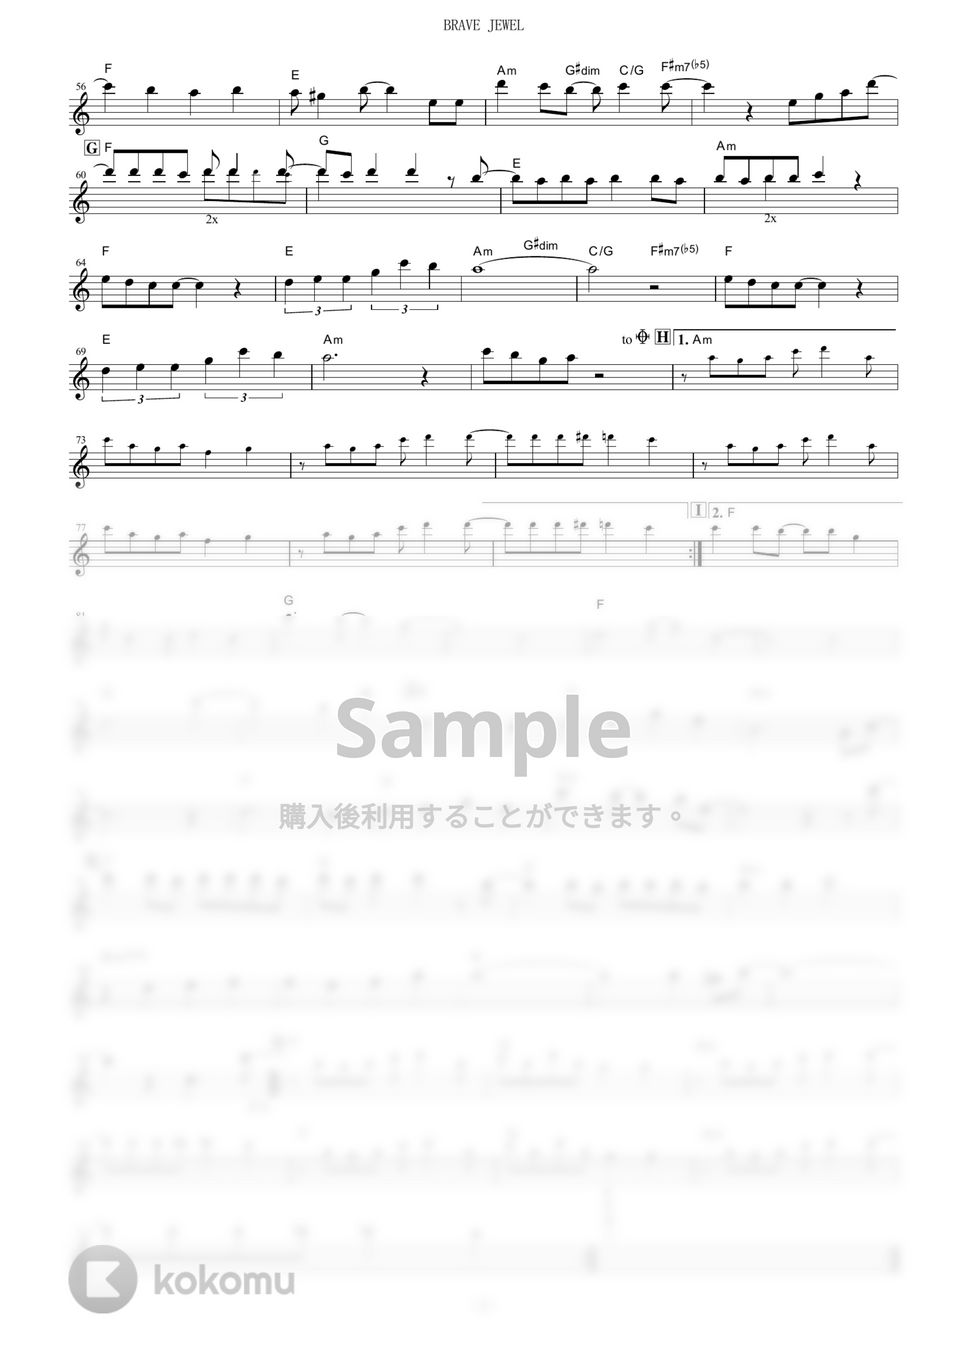 BanG Dream! 2nd Season（バンドリ！） - BRAVE JEWEL【in C】 by muta-sax